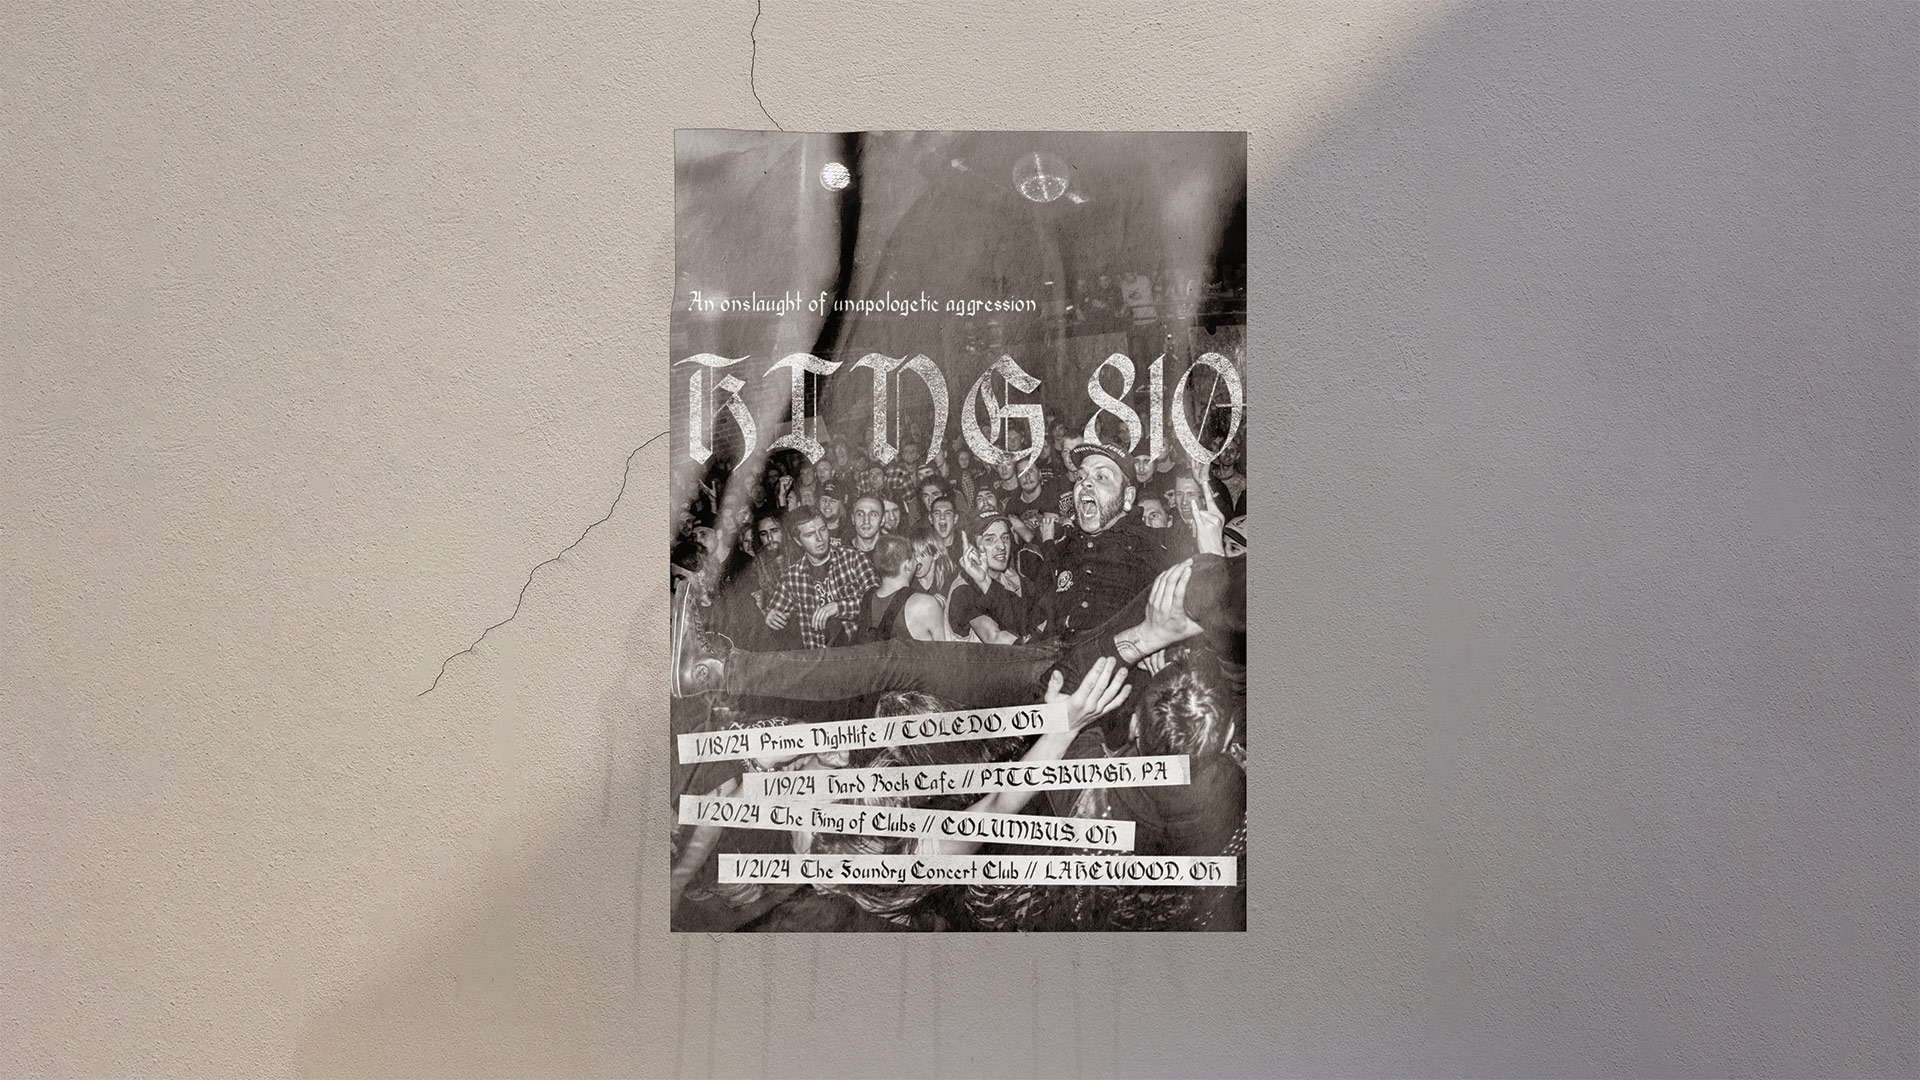 King 810 concert promotional poster